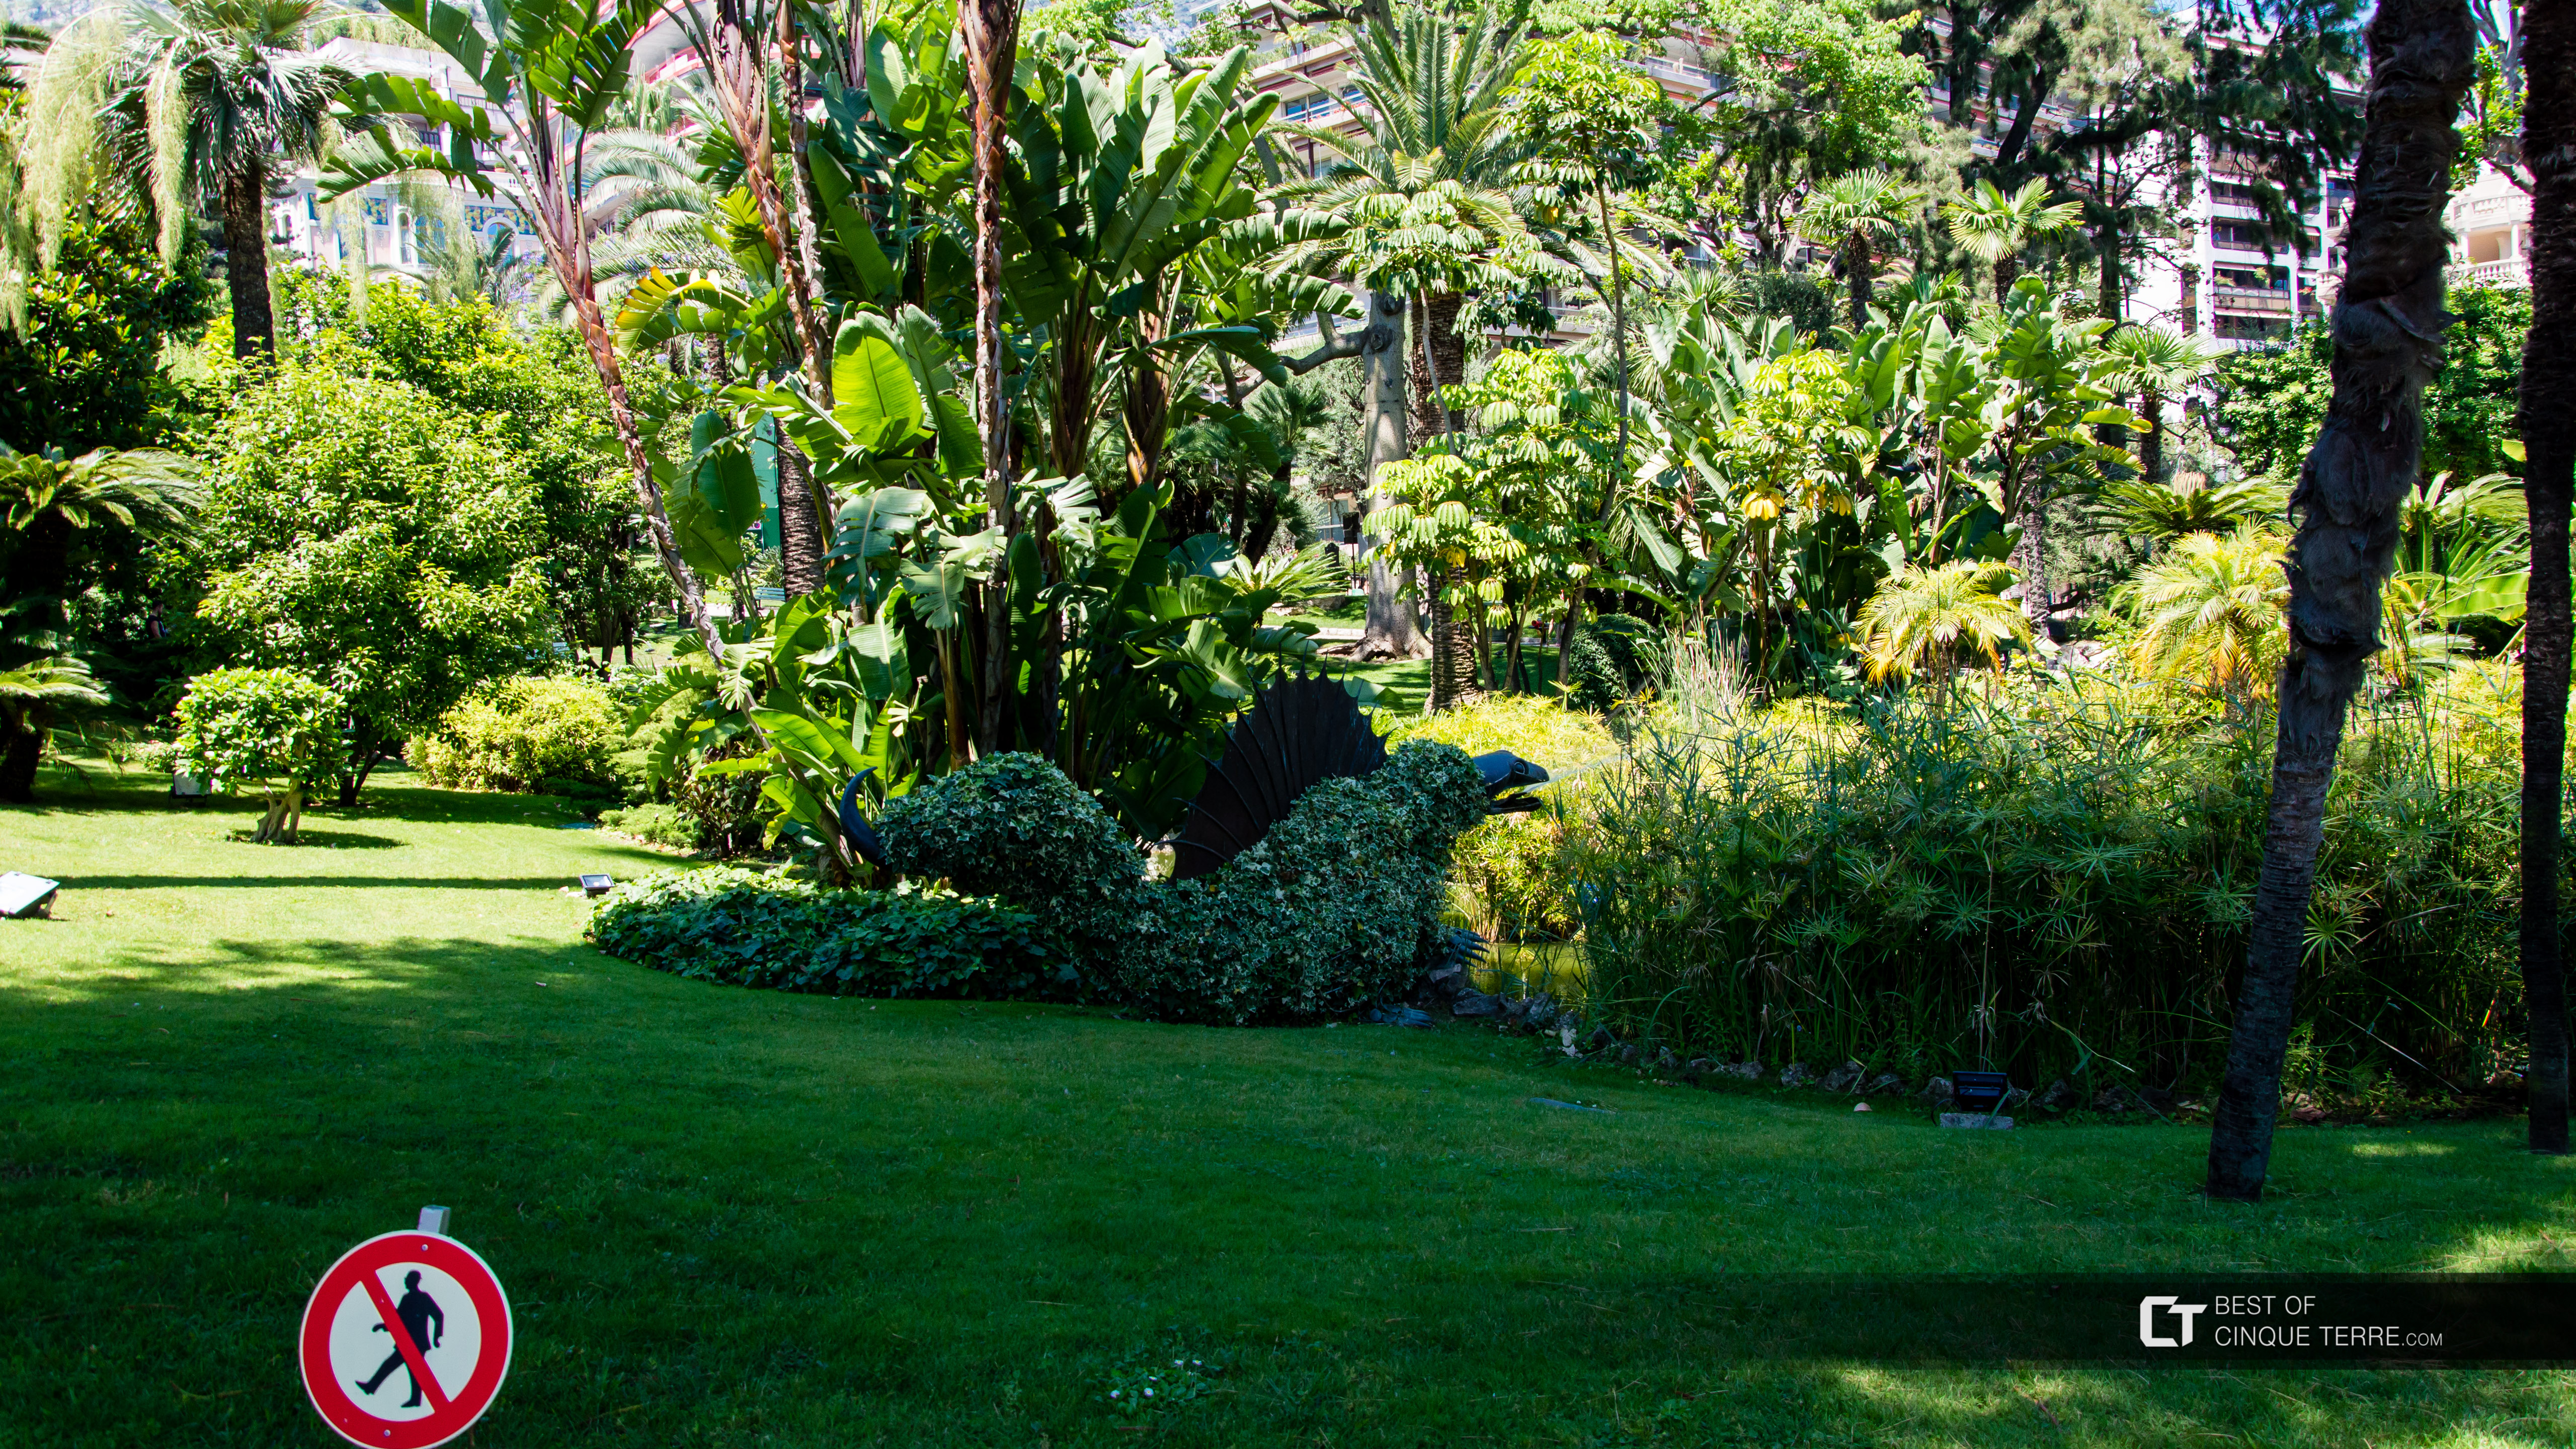 Сади біля казино в Монте-Карло, Монако